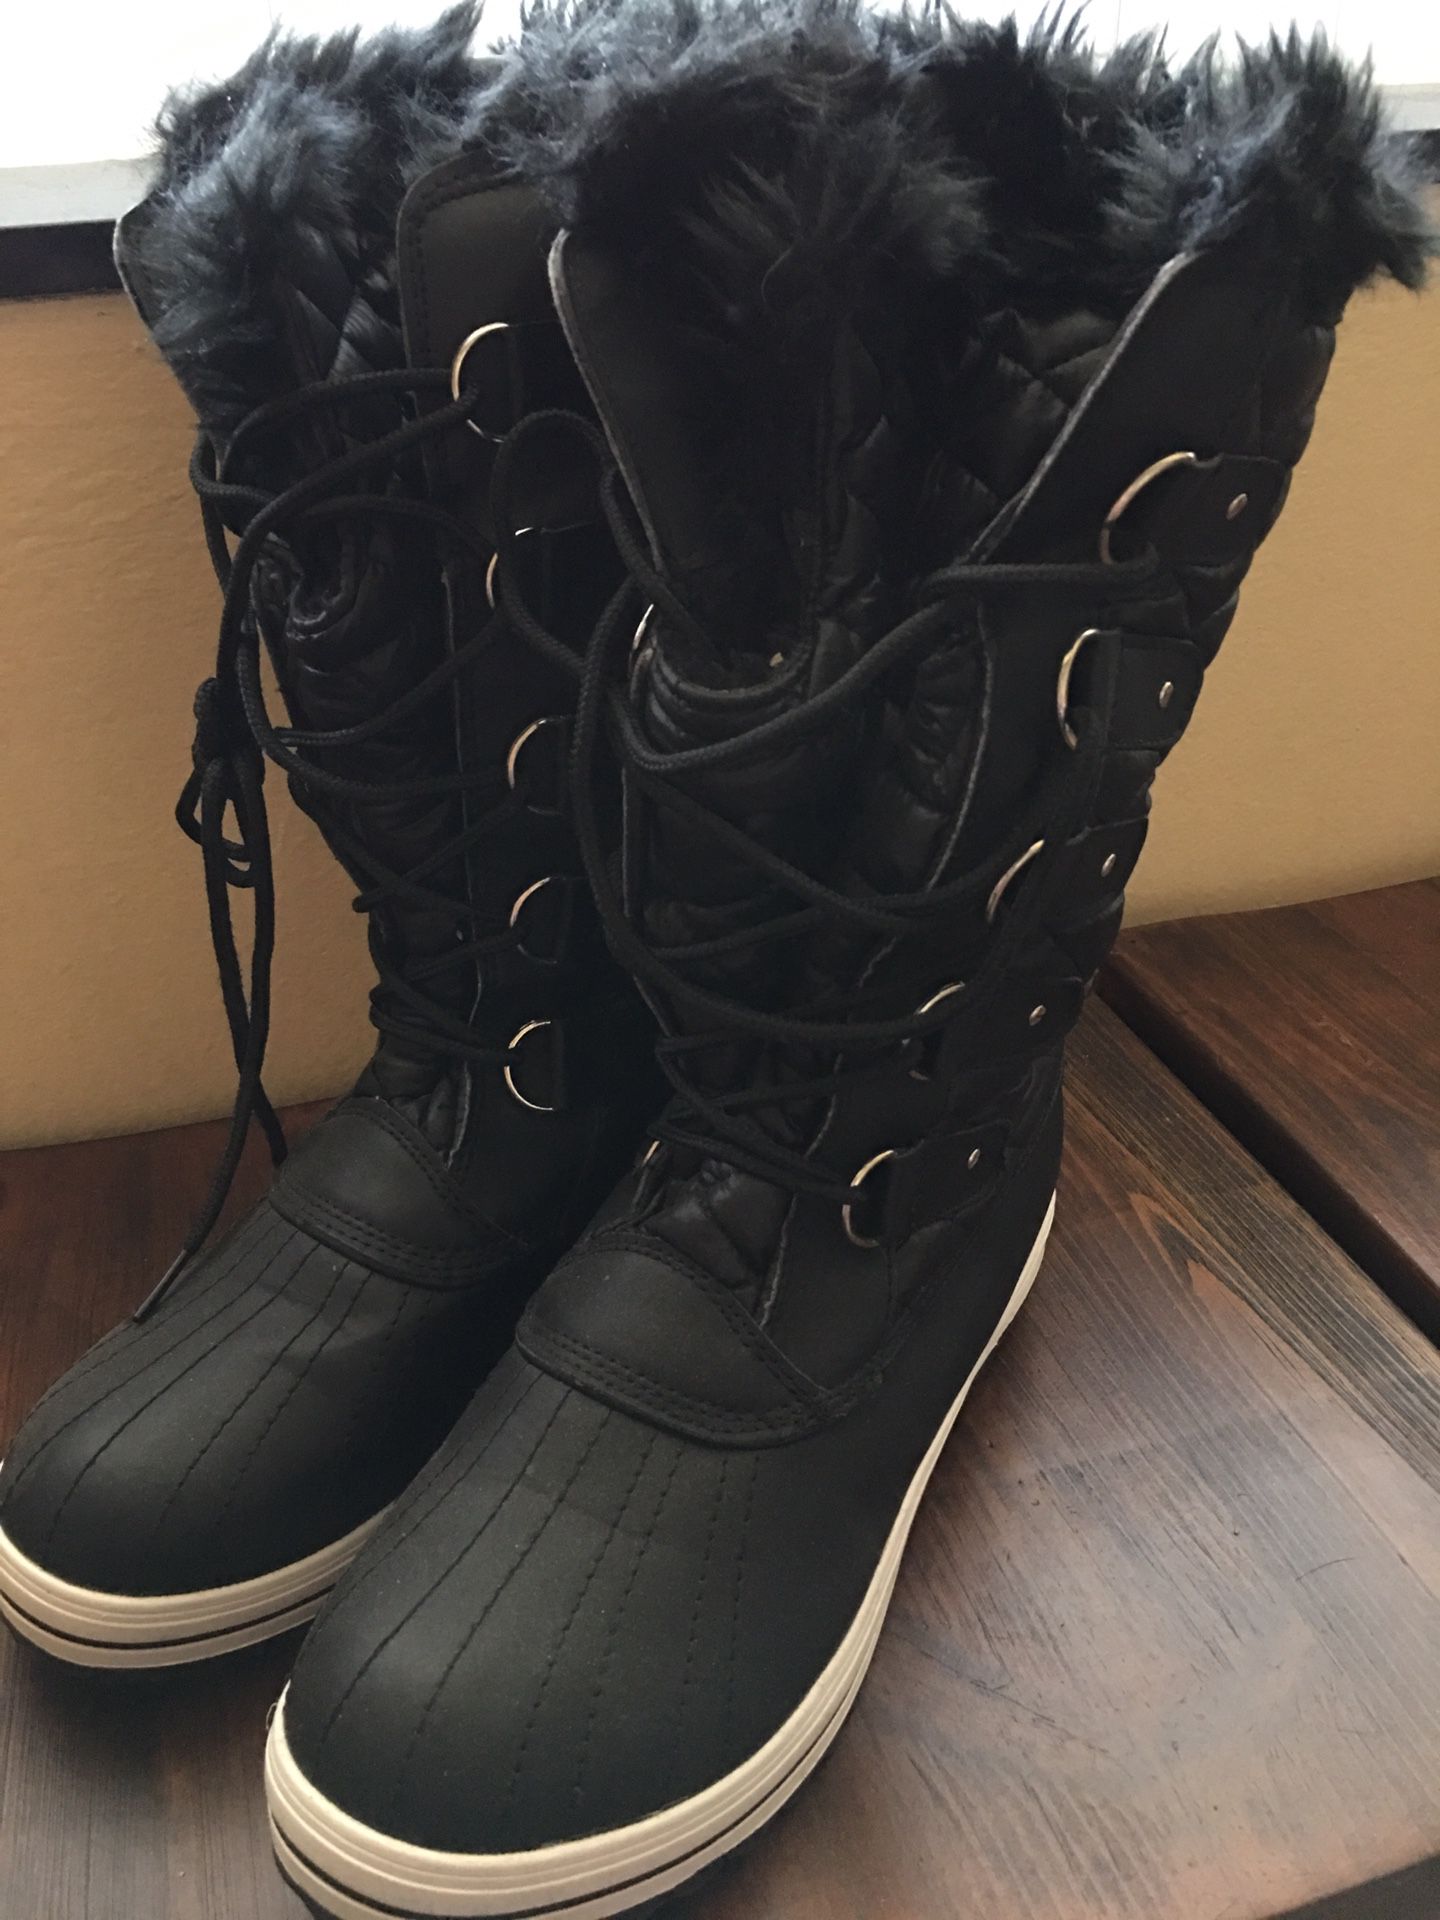 New- Women winter boots size 11